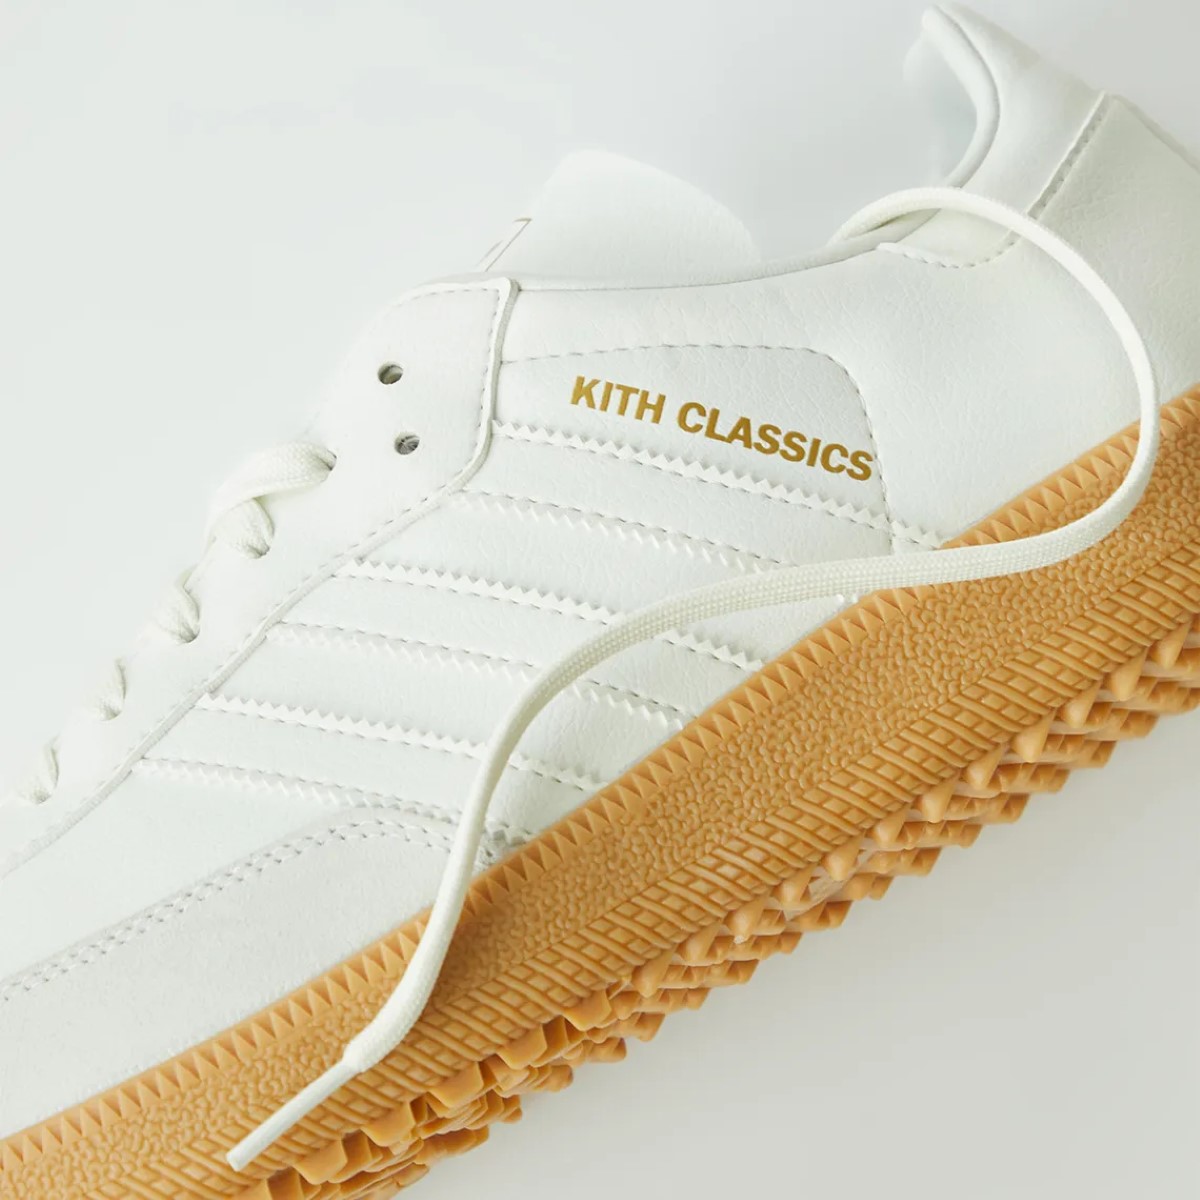 KITH Classics melds with adidas Samba Golf